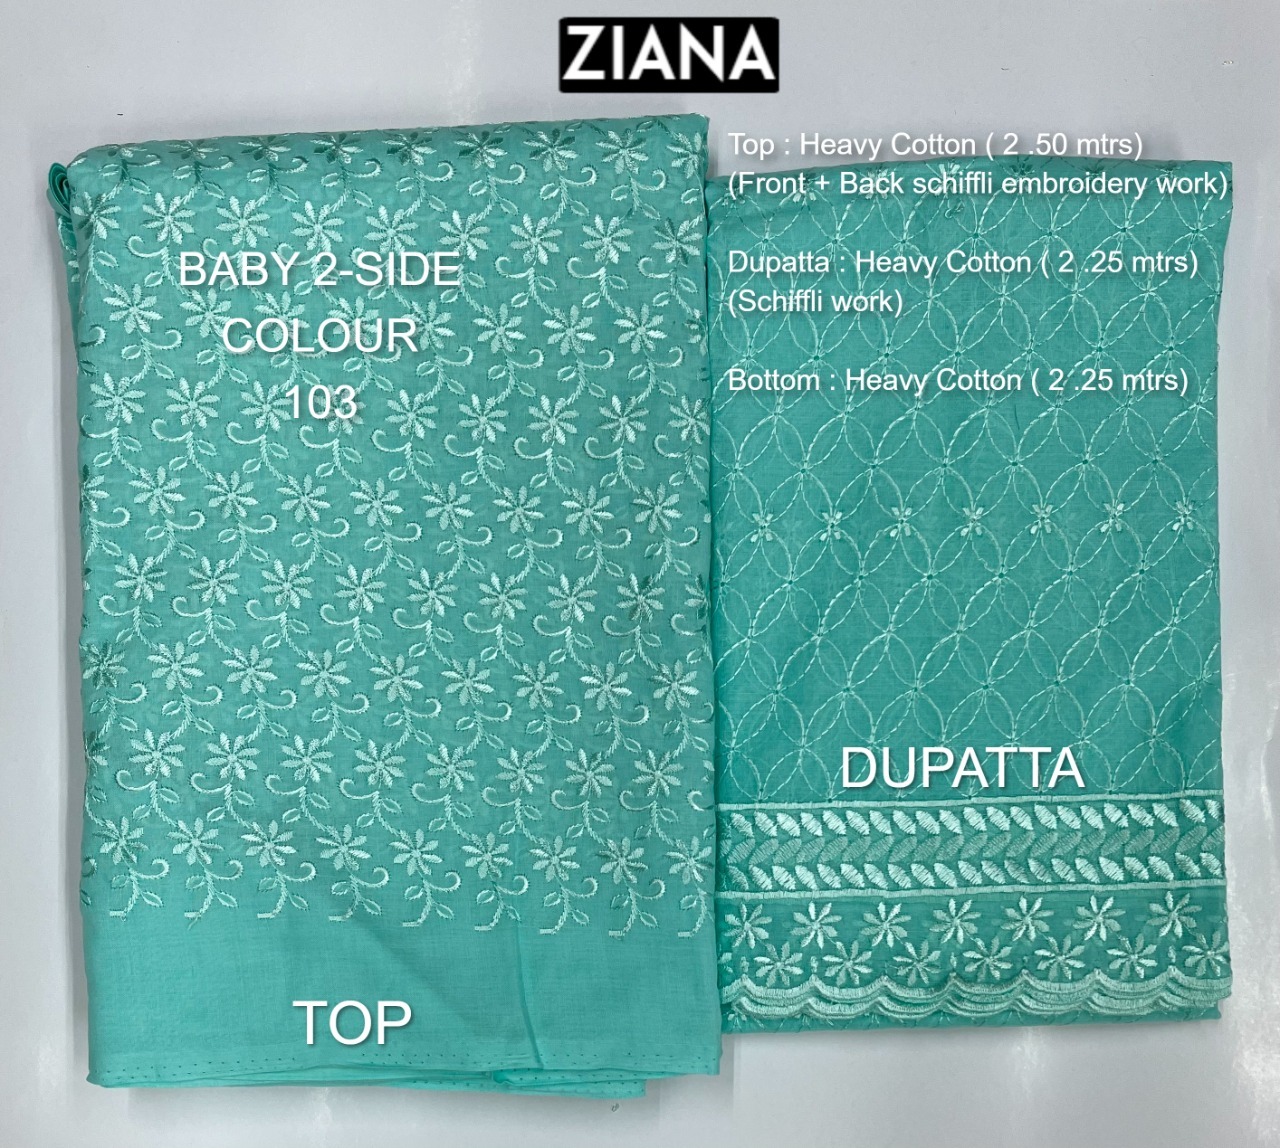 ziana baby 2 side colour 103 heavy cotton regal look embroidery salwar suit colour set